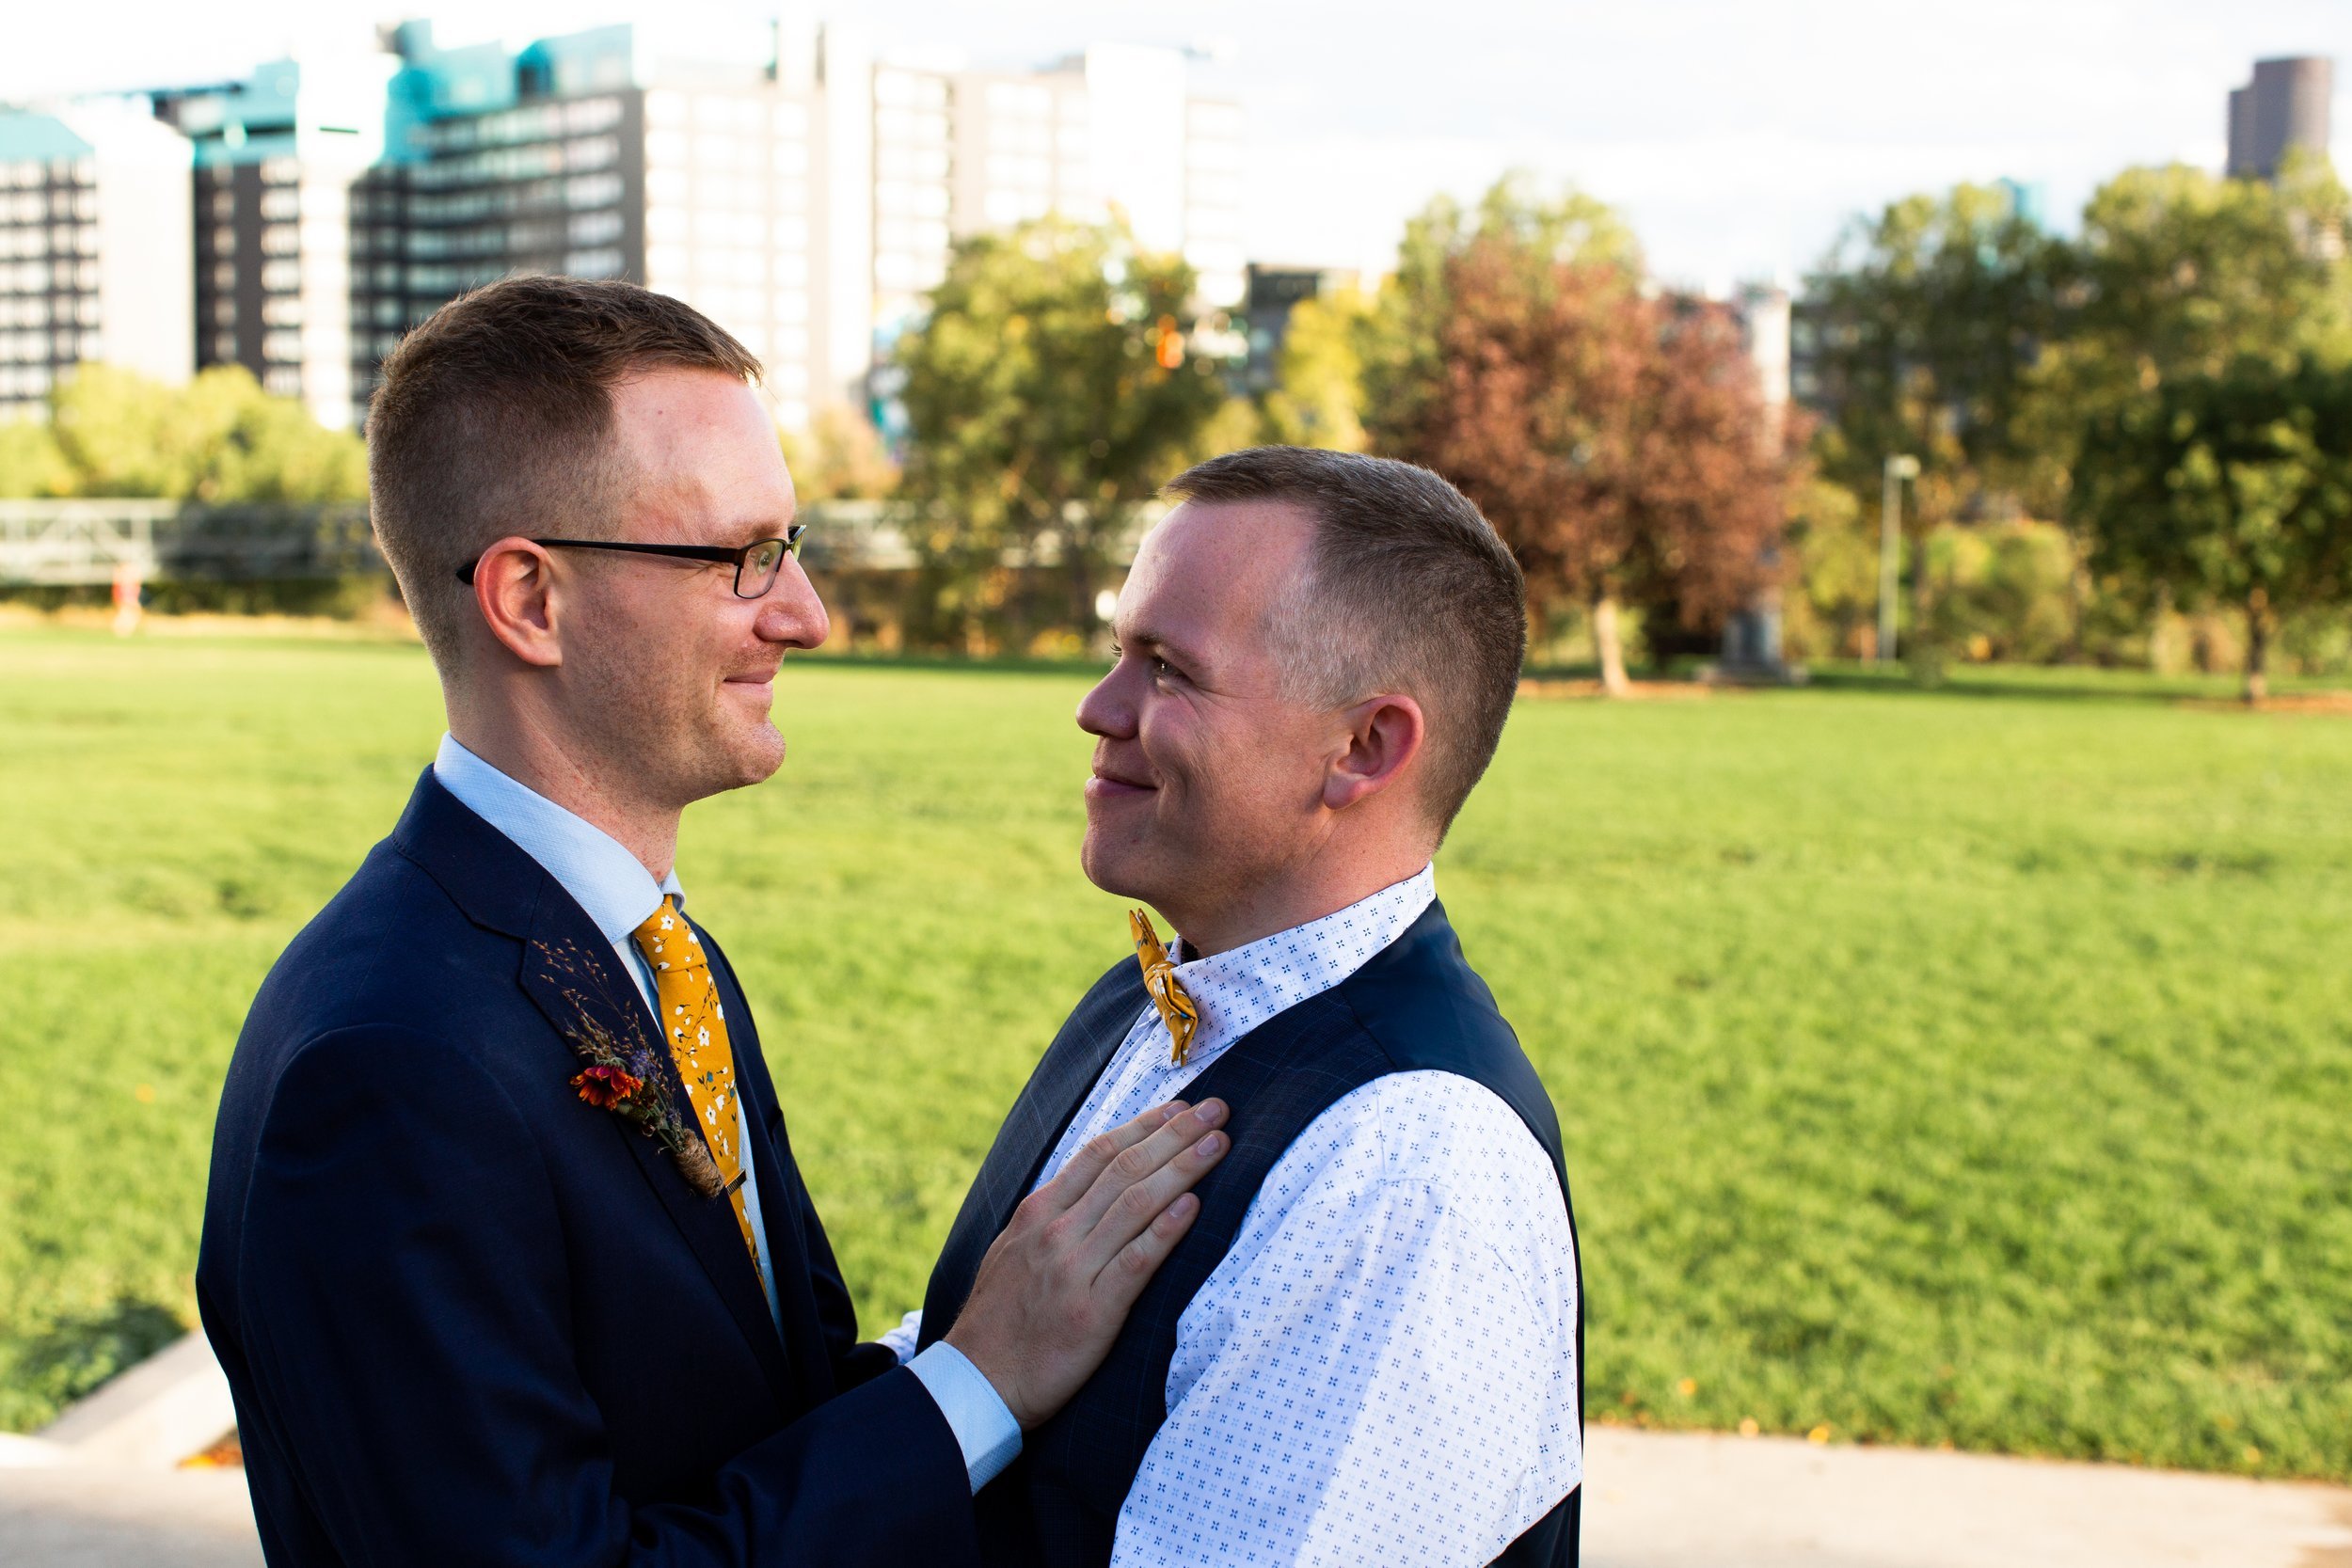 Wedding — Portrait Photographer in Denver, CO